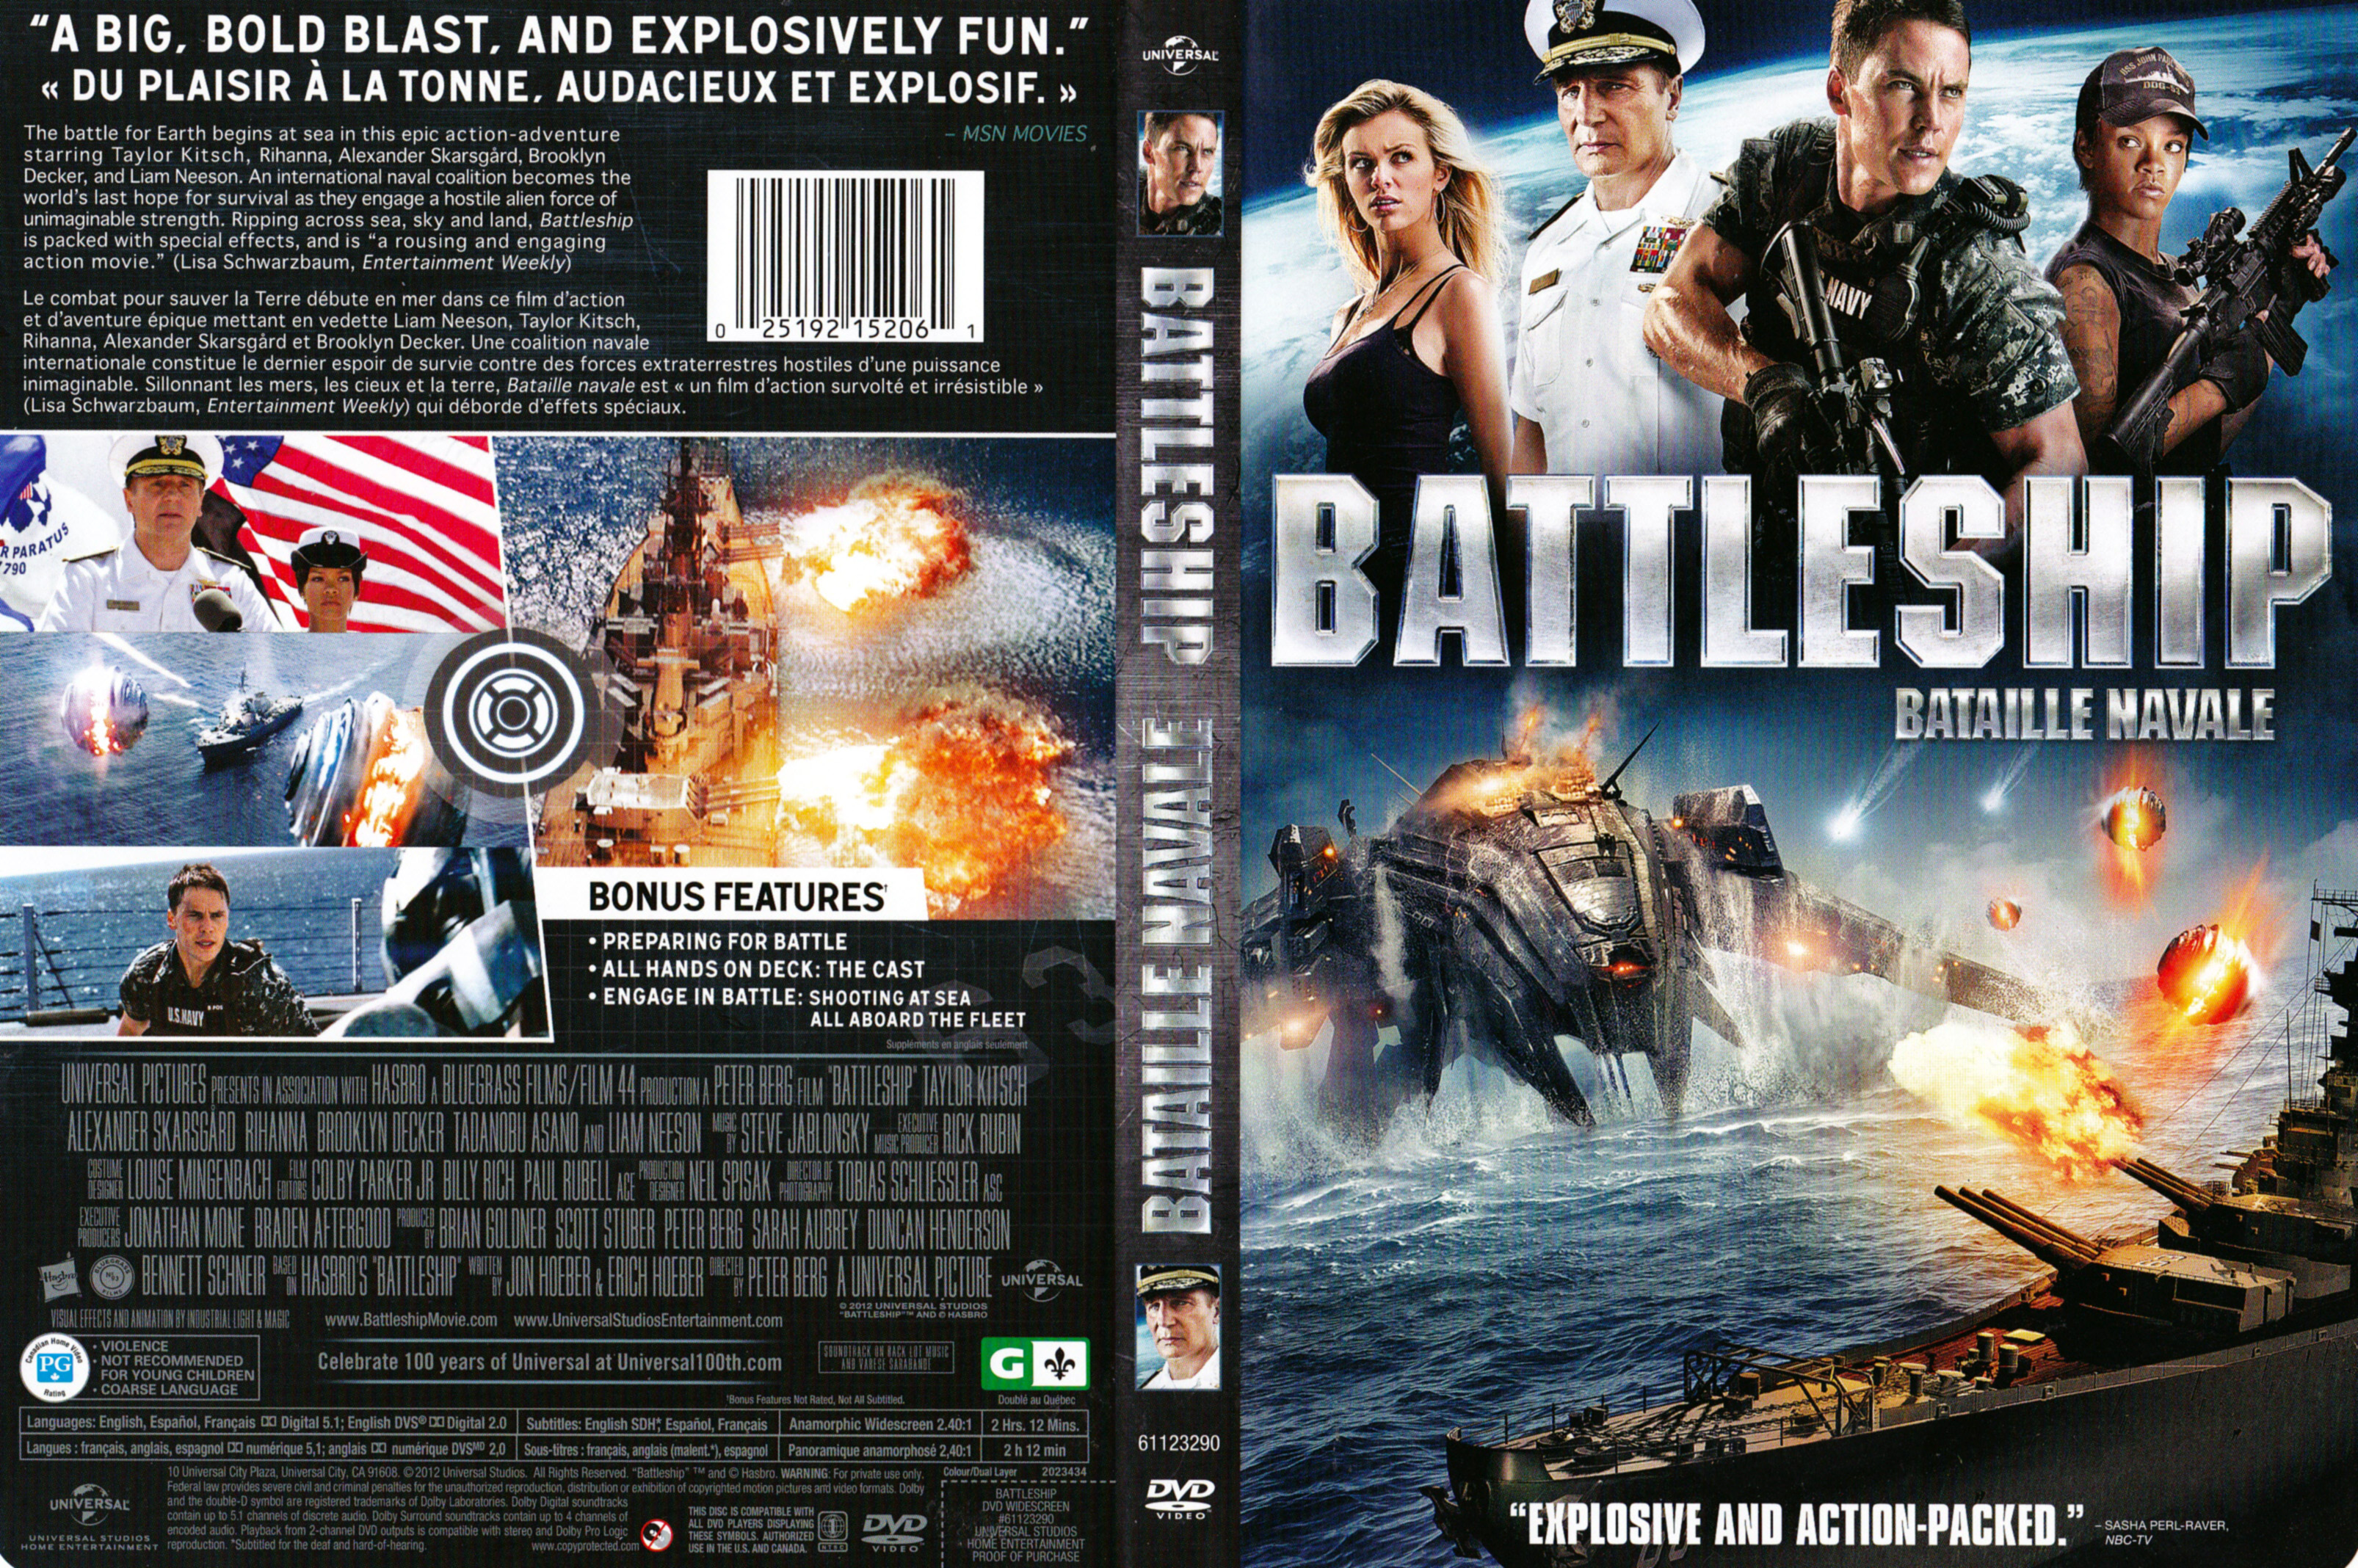 Jaquette DVD Bataille Navale - Battleship (Canadienne)